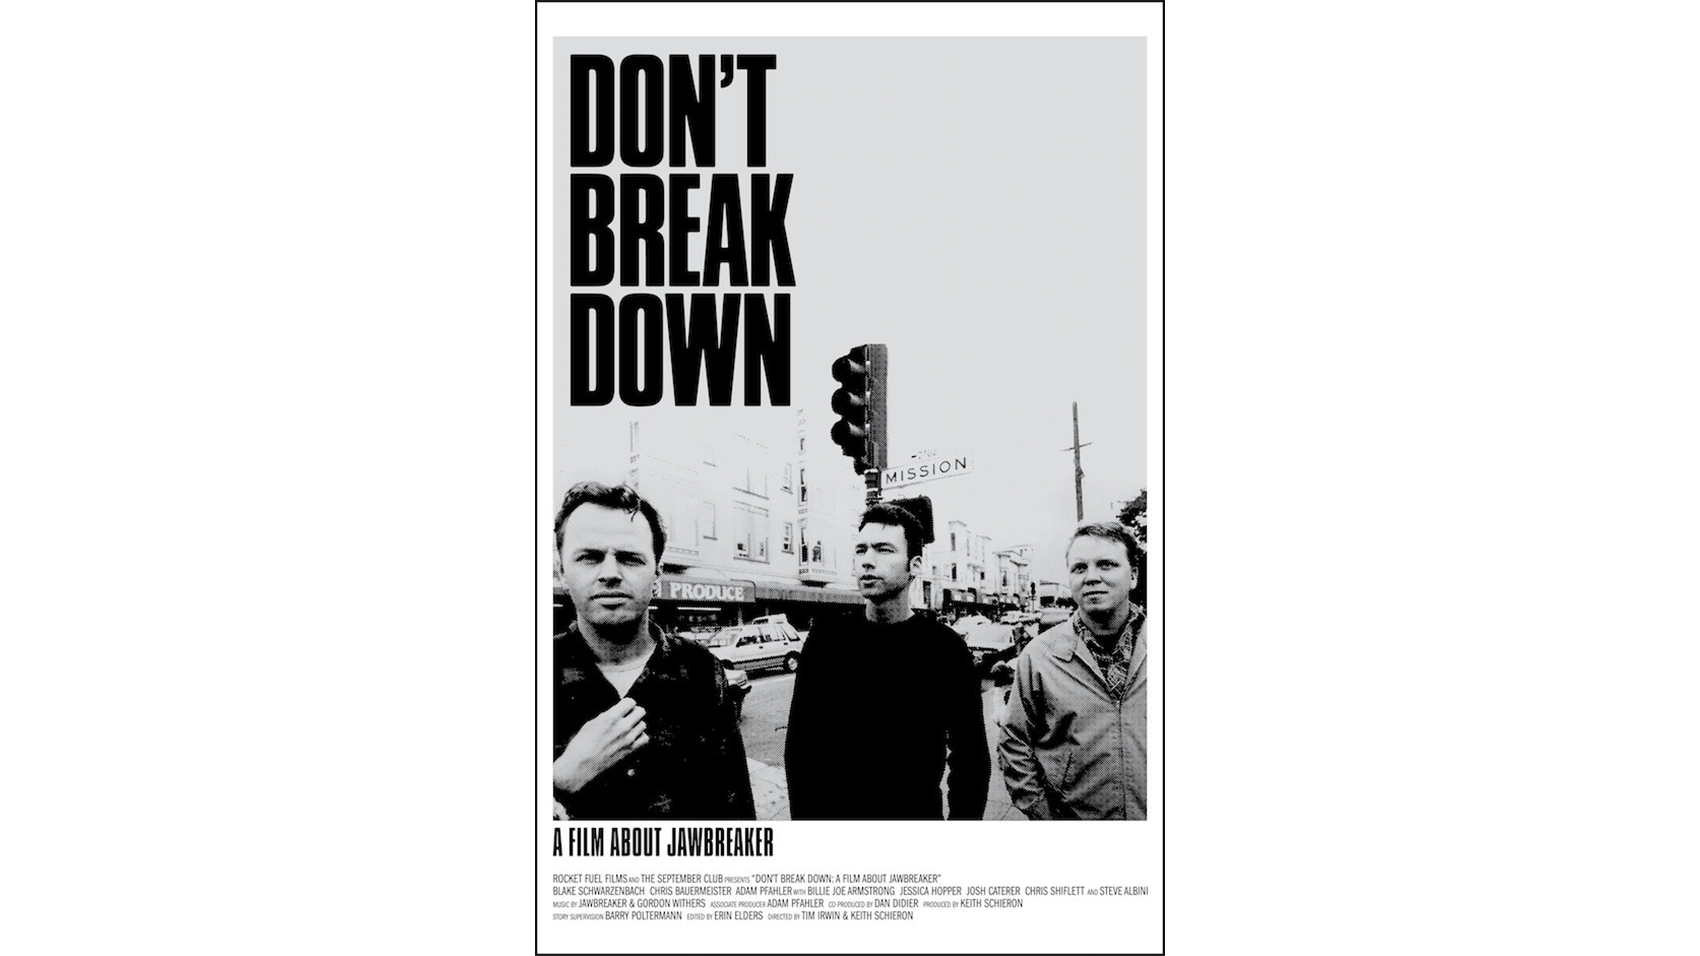 Breakdown Breakdown Break Break down Song. Heeeey Break and down. Dont break